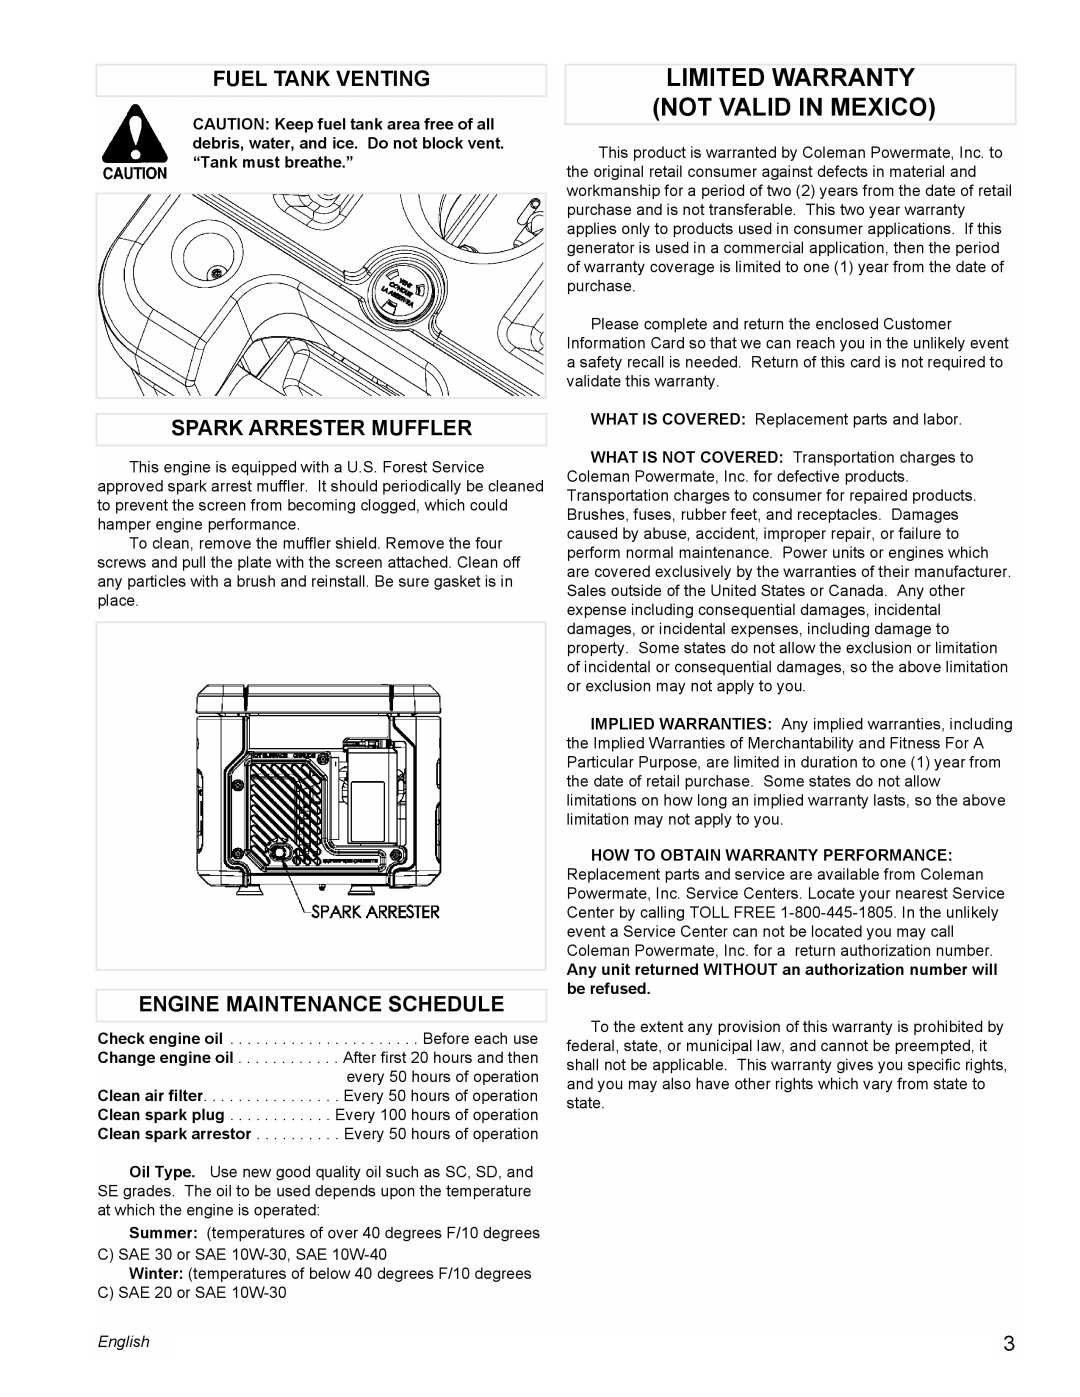 Powermate PE0401853 manual Fuel Tank Venting, Spark Arrester Muffler, Engine Maintenance Schedule, English 